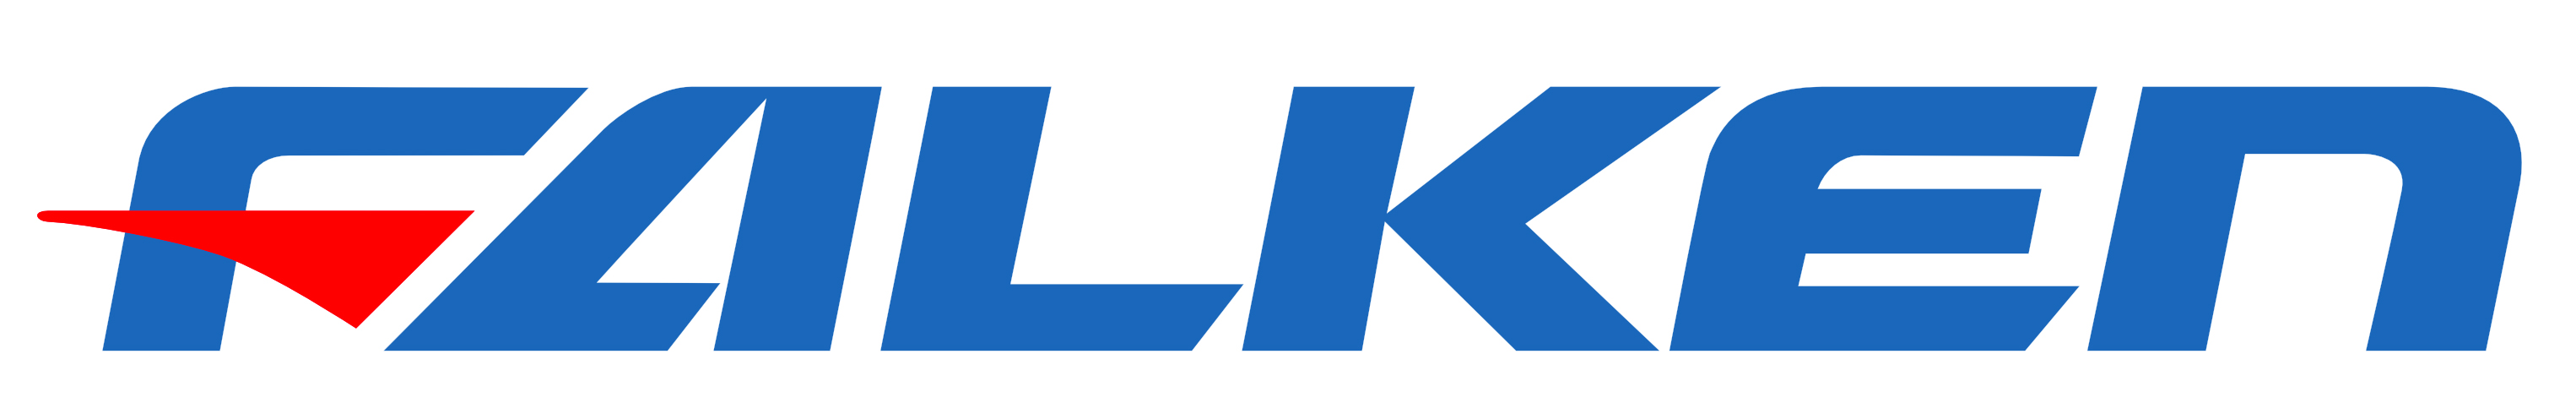 http://www.beadlok.com/Logo/falken-logo.jpg